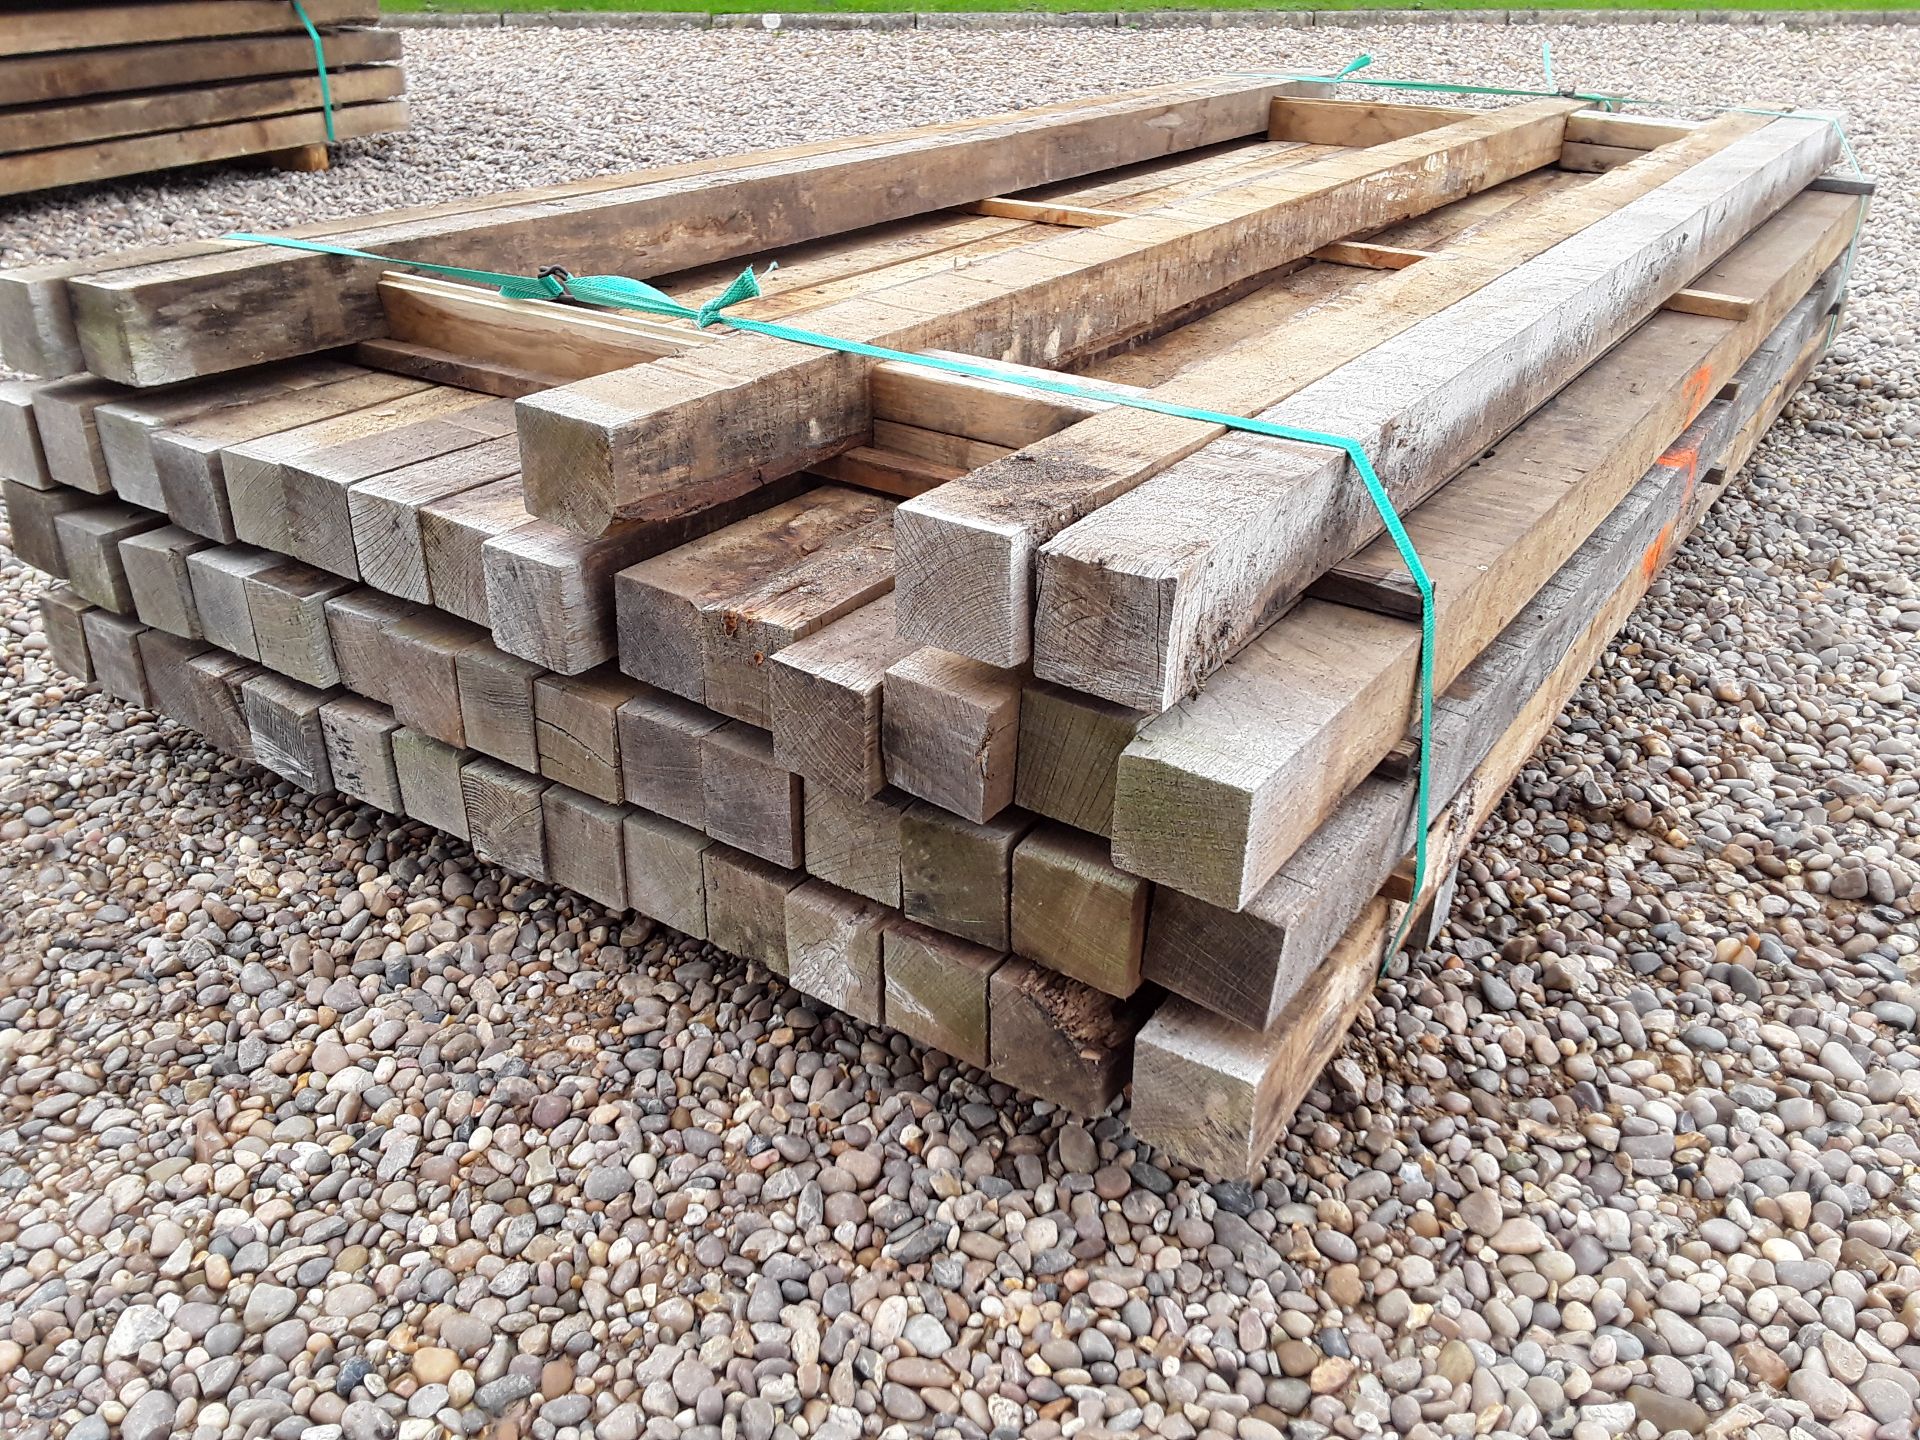 50 x Hardwood Air Dried Rustic Sawn English Oak Timber Posts - Image 3 of 5